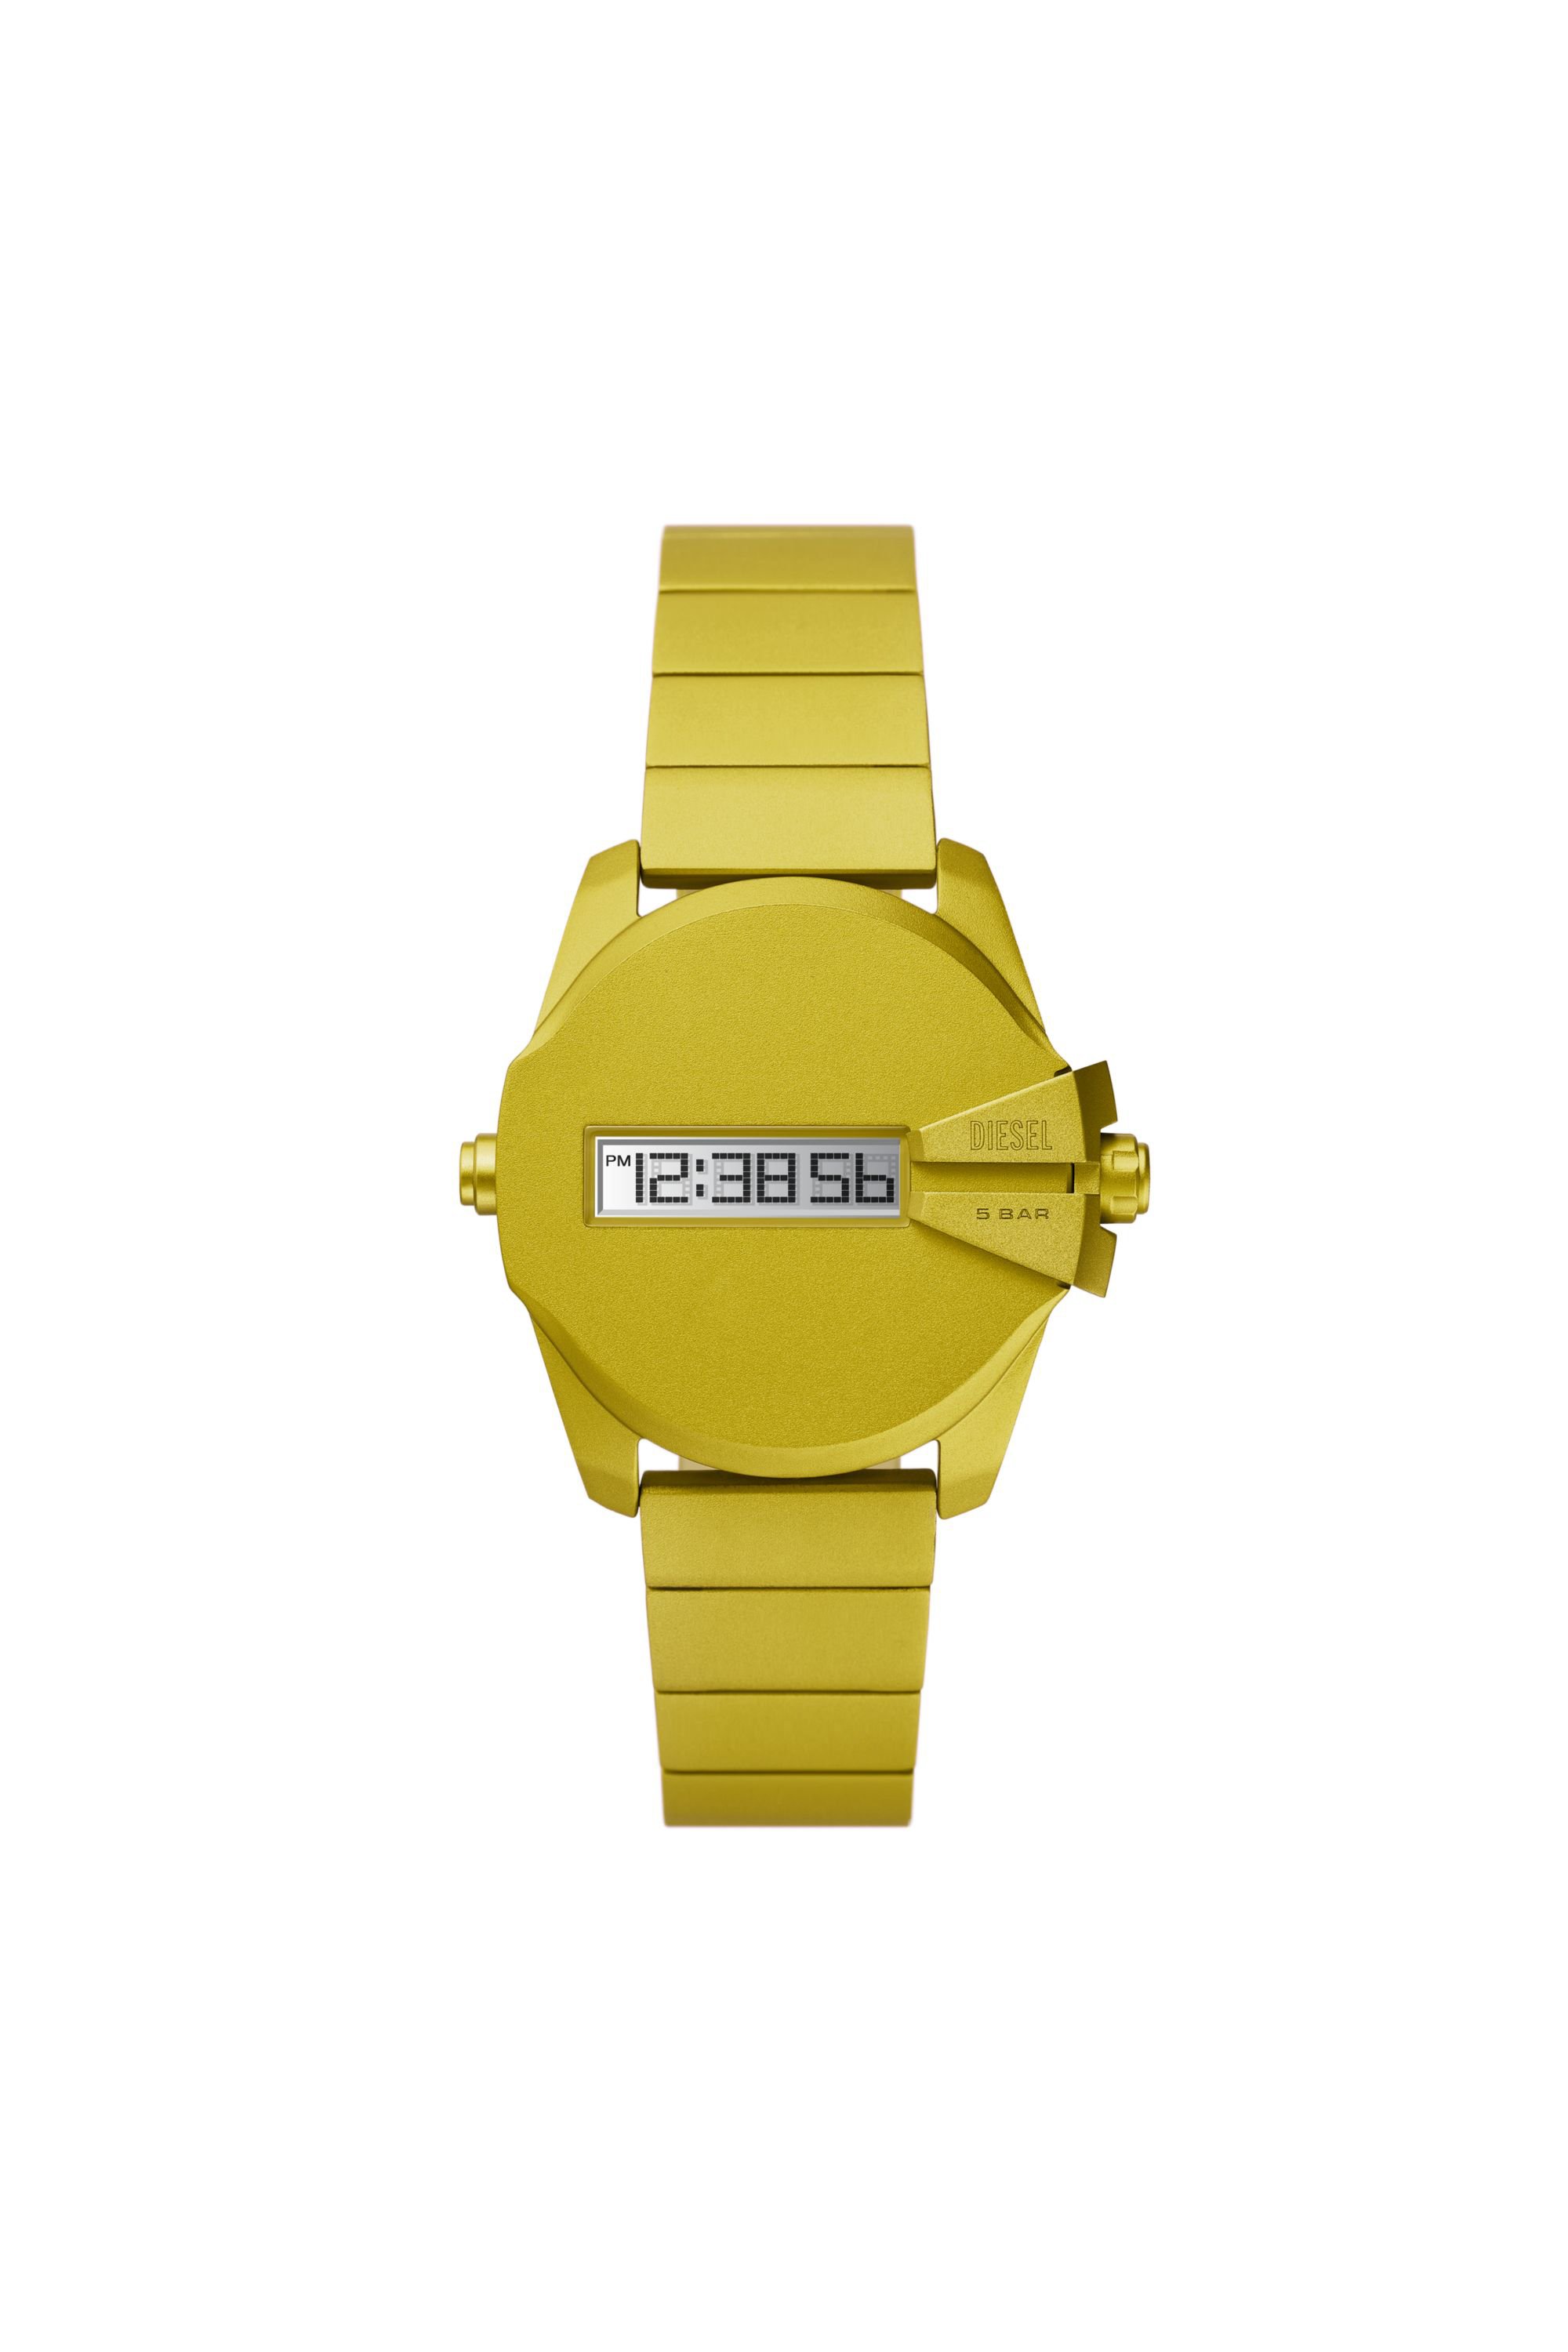 Diesel - DZ2207 WATCH, Man Baby chief digital yellow aluminum watch in Yellow - Image 1